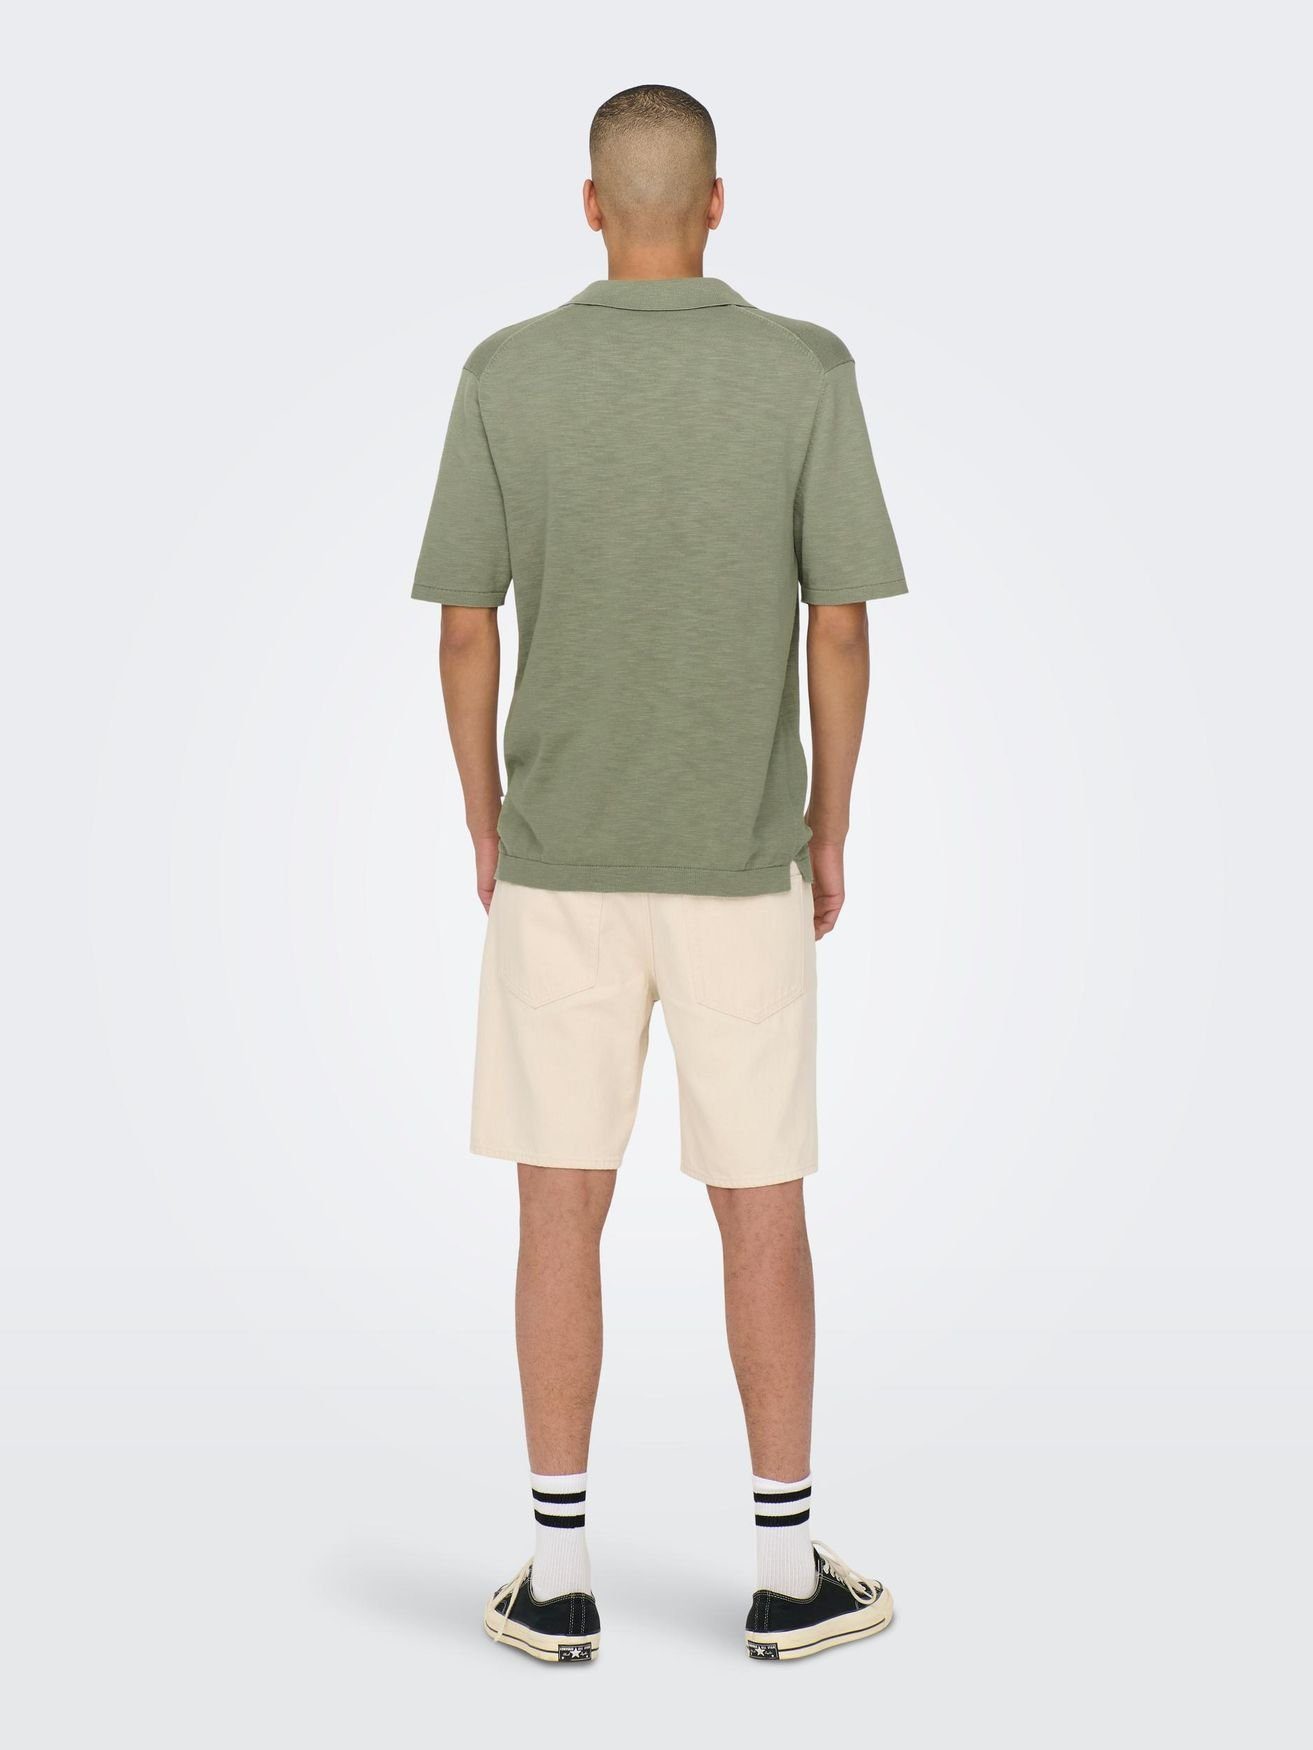 ONLY & SONS Poloshirt Einfarbiges Grün aus in 5025 Polo Shirt ONSACE Baumwolle Kurzarm Hemd